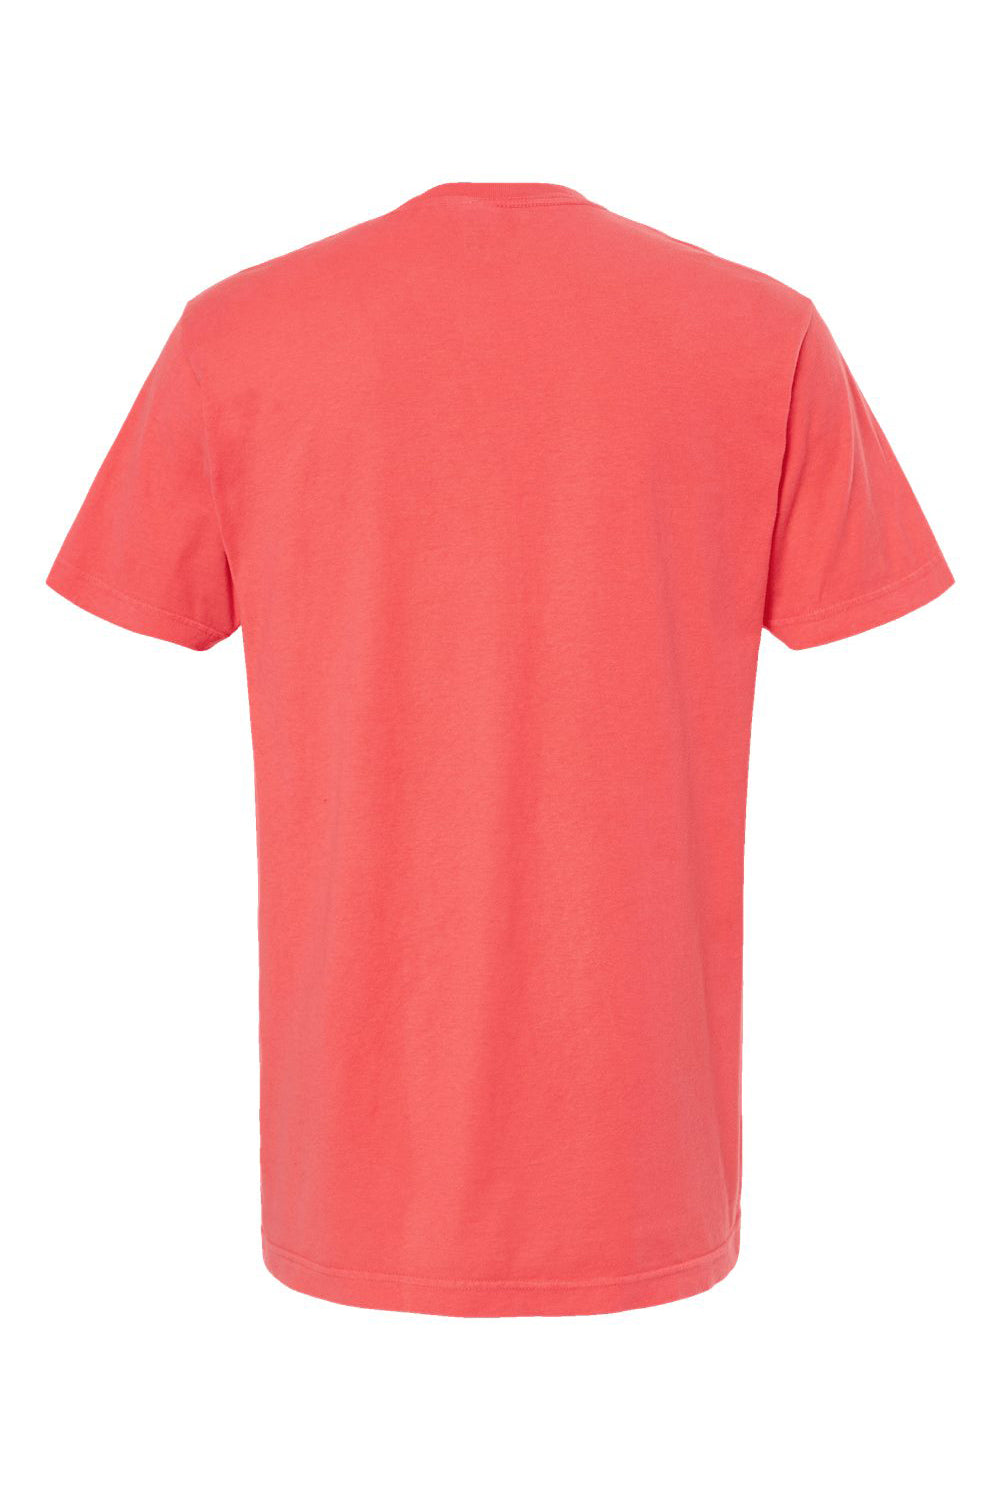 M&O 6500M Mens Vintage Garment Dyed Short Sleeve Crewneck T-Shirt Bright Salmon Flat Back